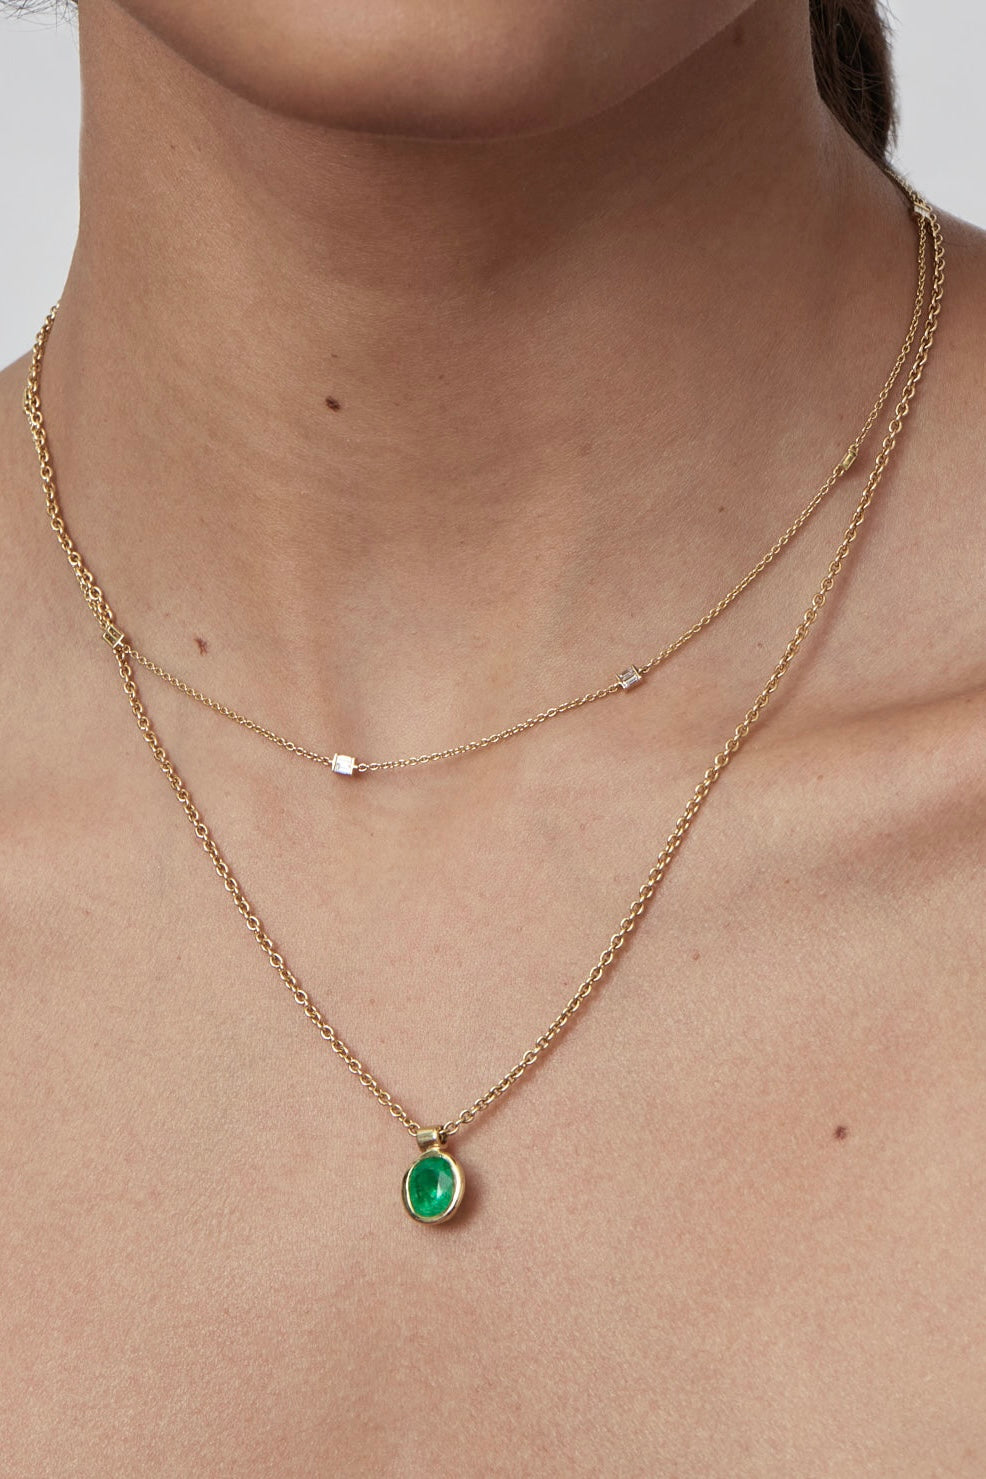 Emerald Solitiare Necklace